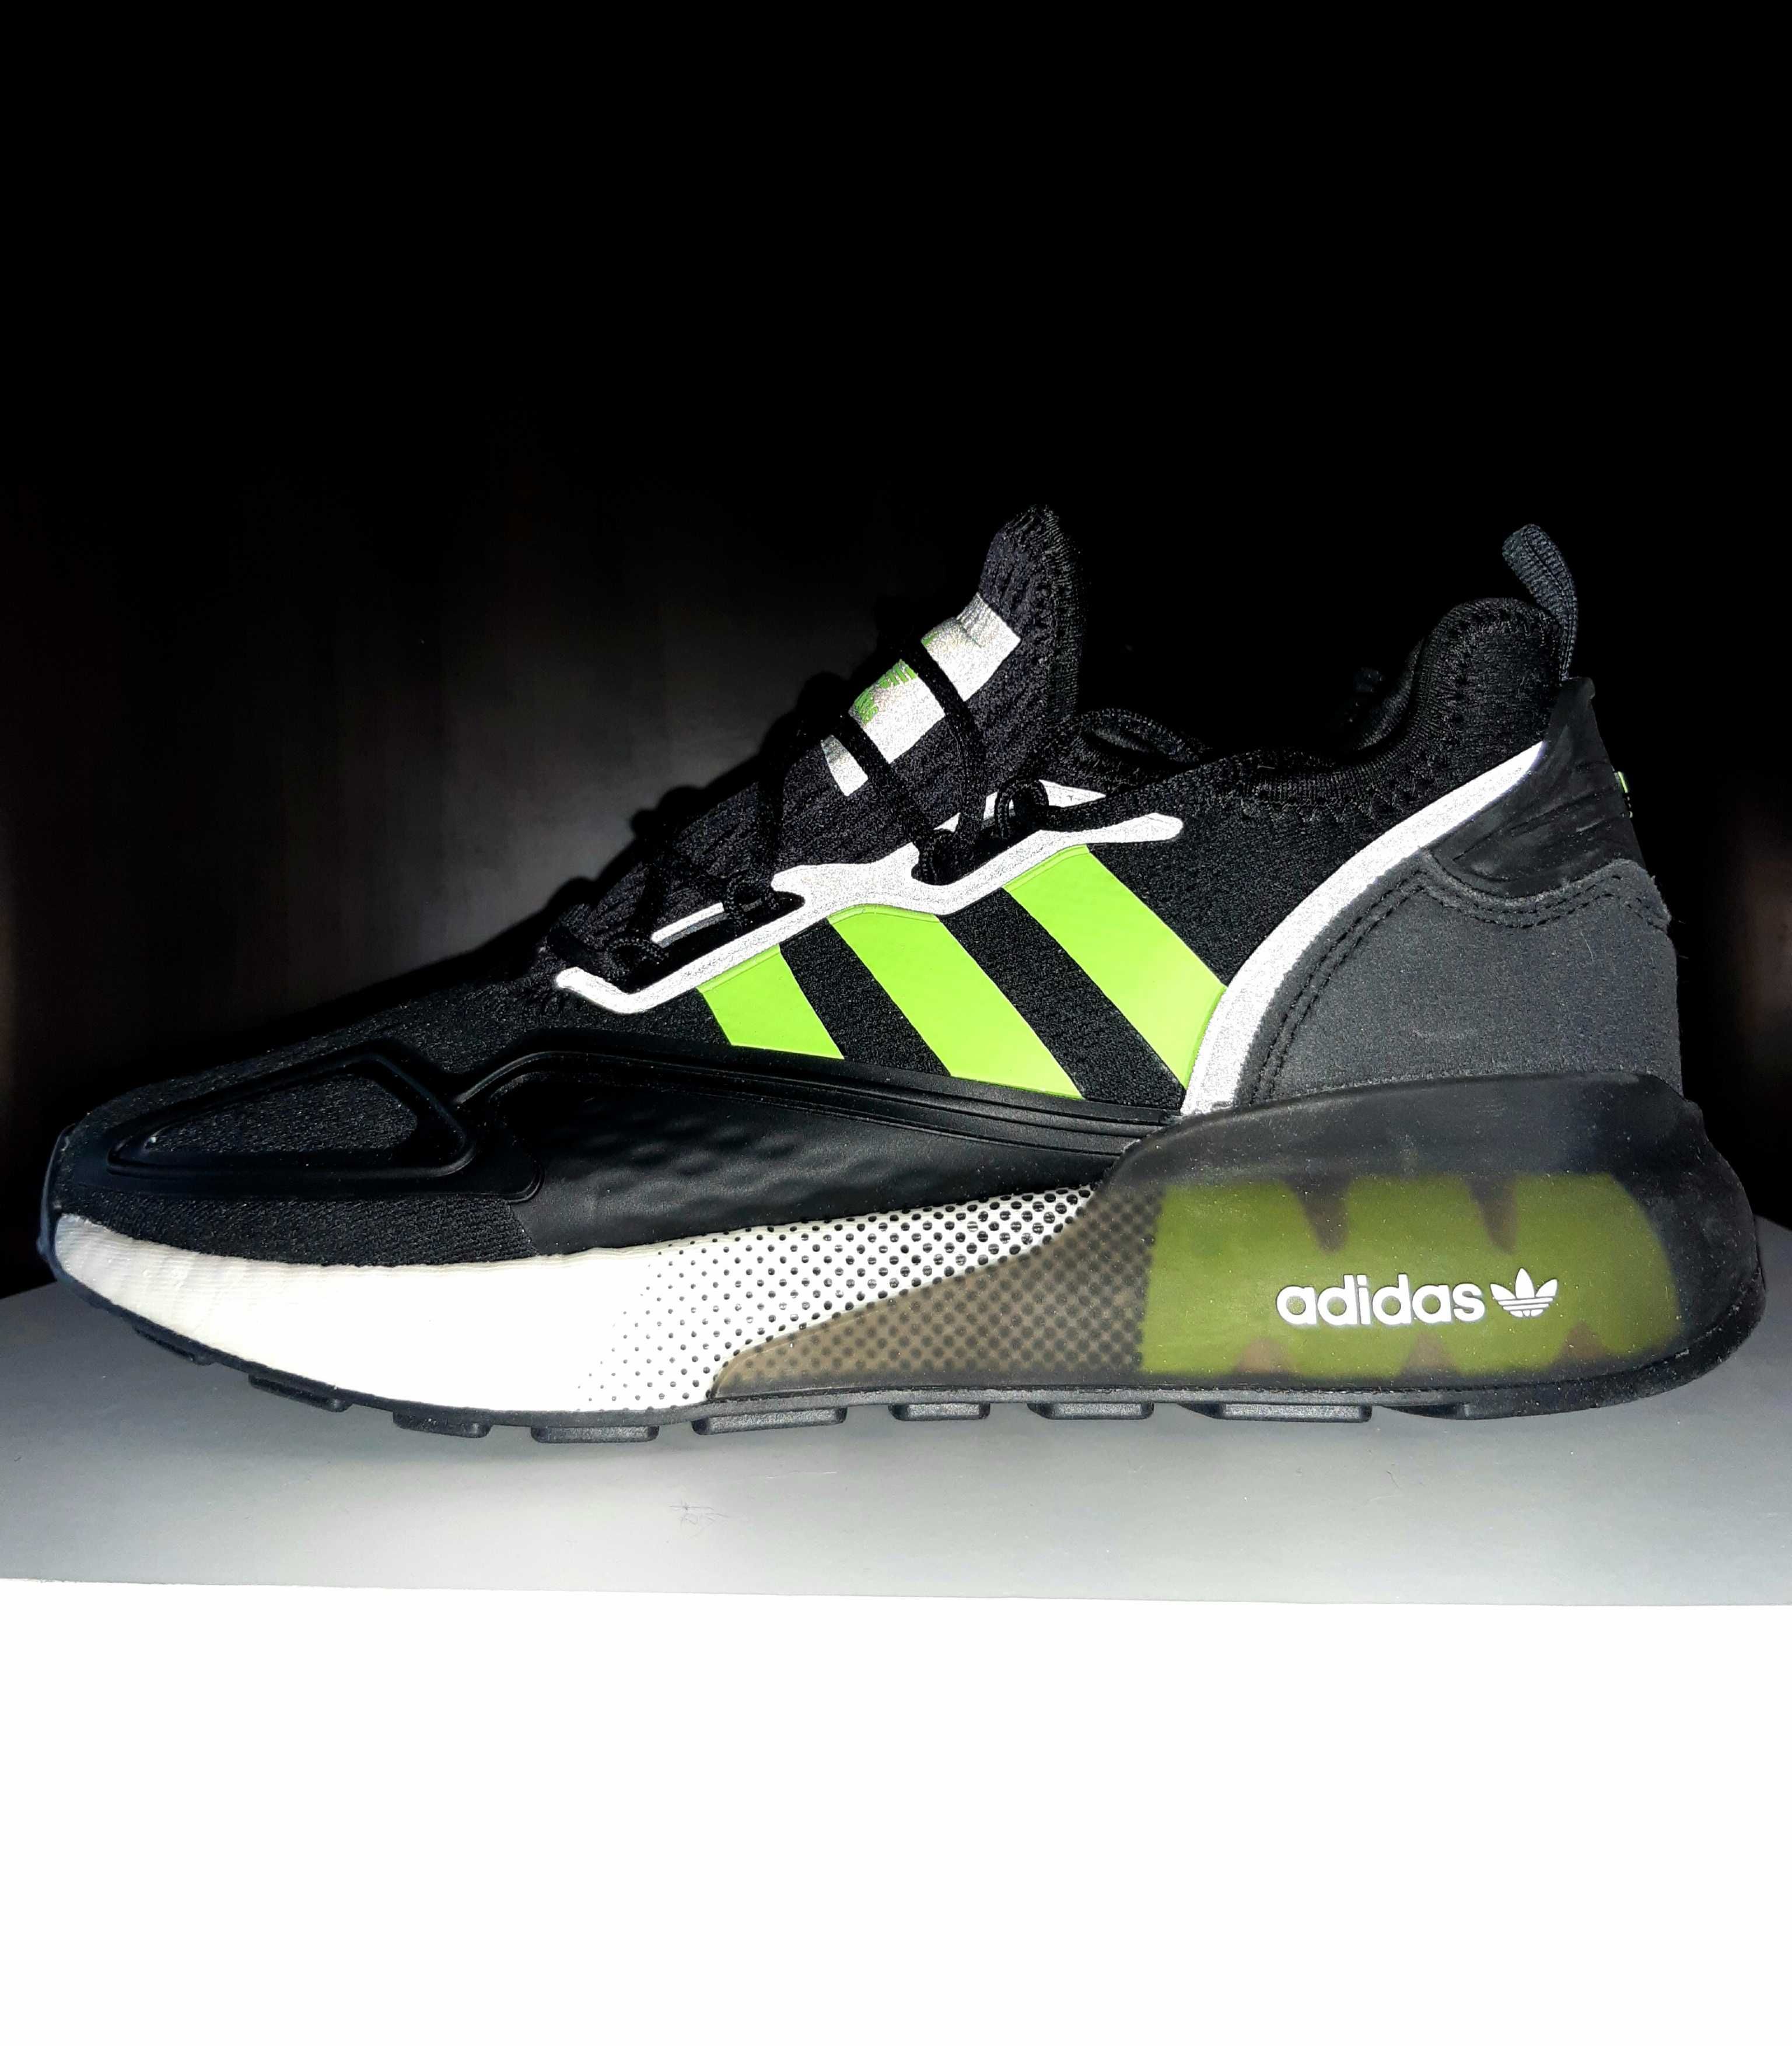 Adidas ZX 2K boost